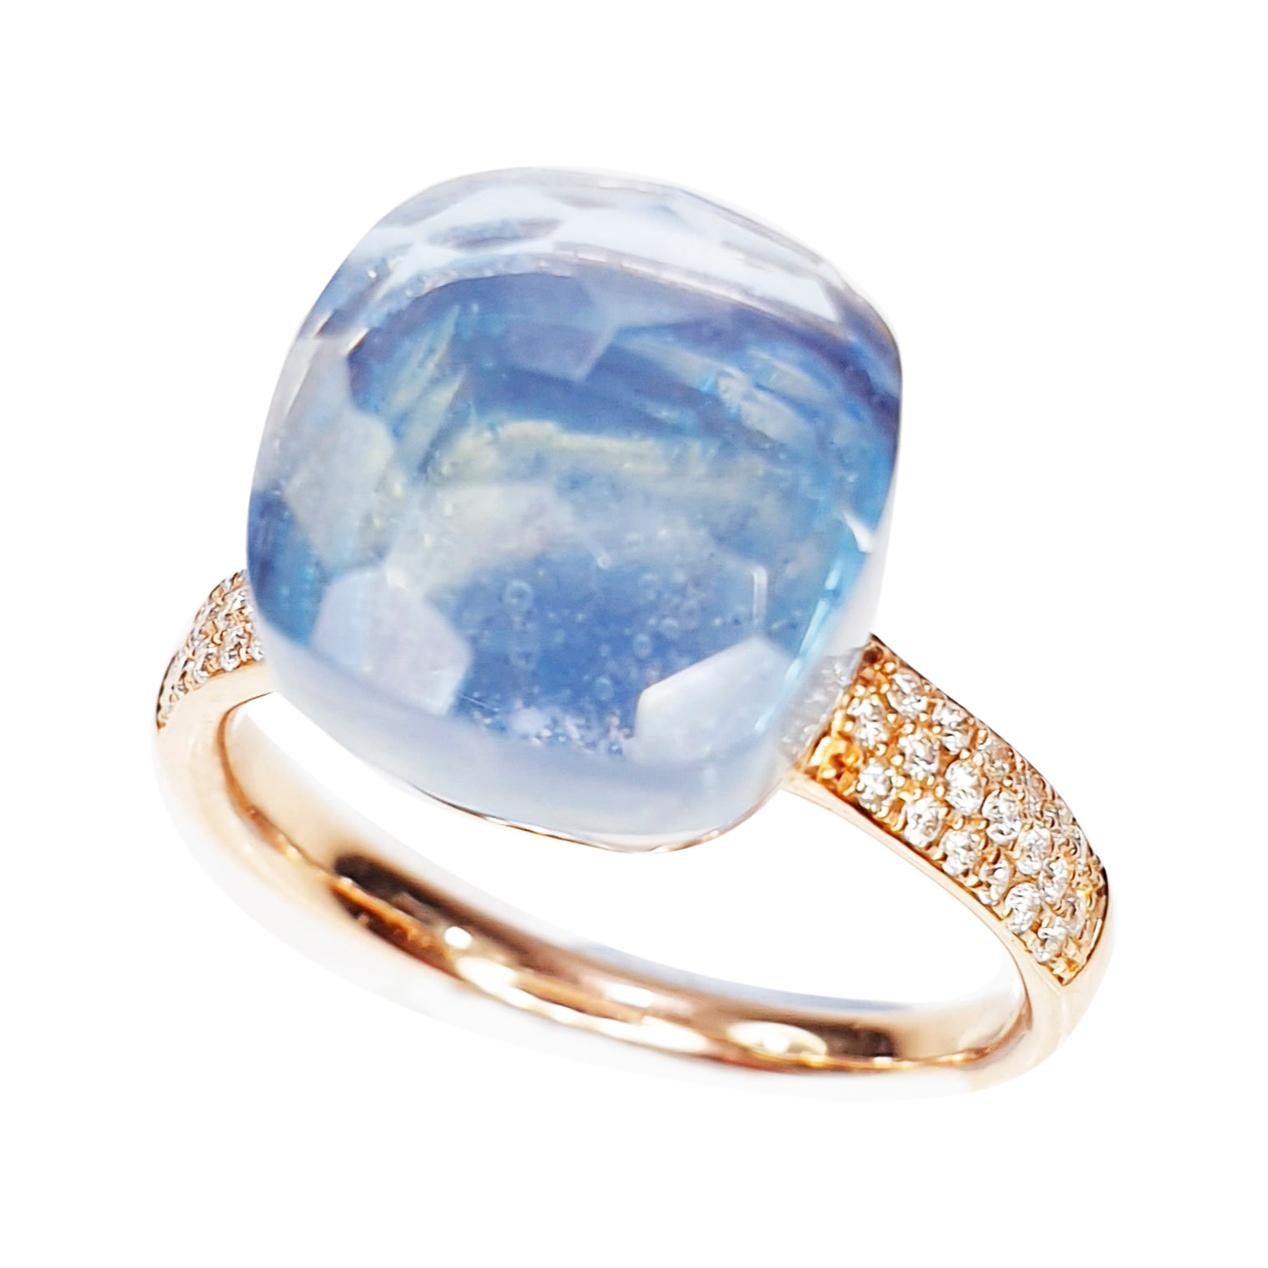 Multifaceted Blue Splash Topaz in 18k Gold and Pavé of Diamonds Ring